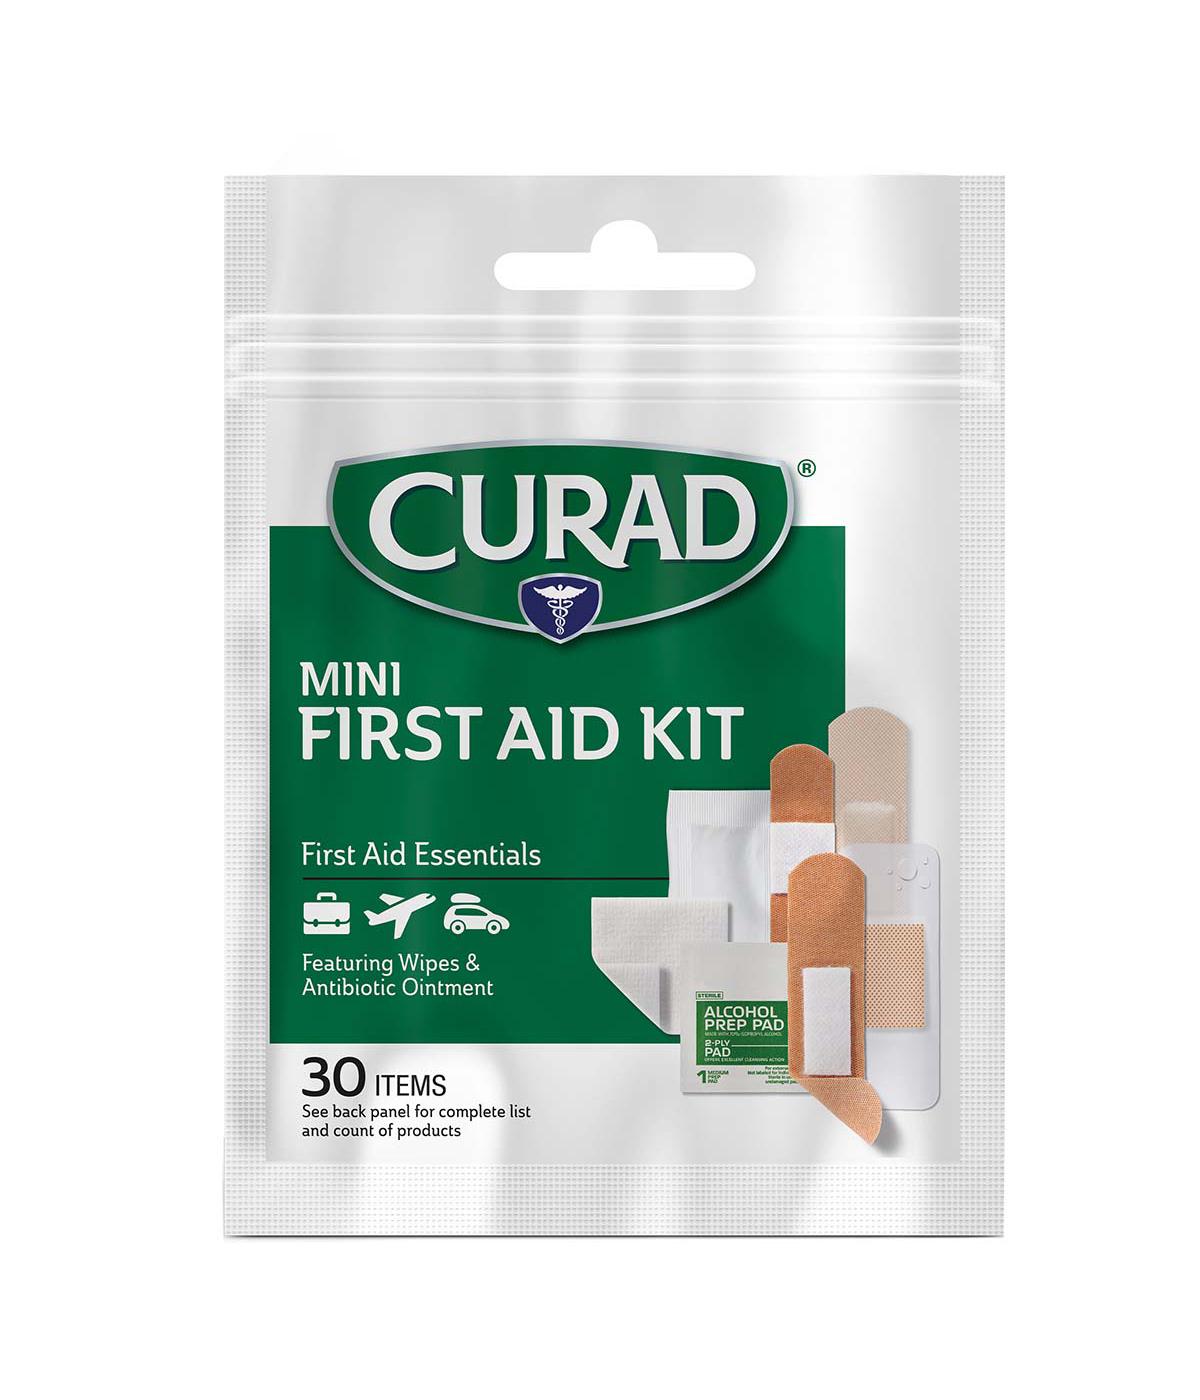 Curad Mini First Aid Kit; image 1 of 2